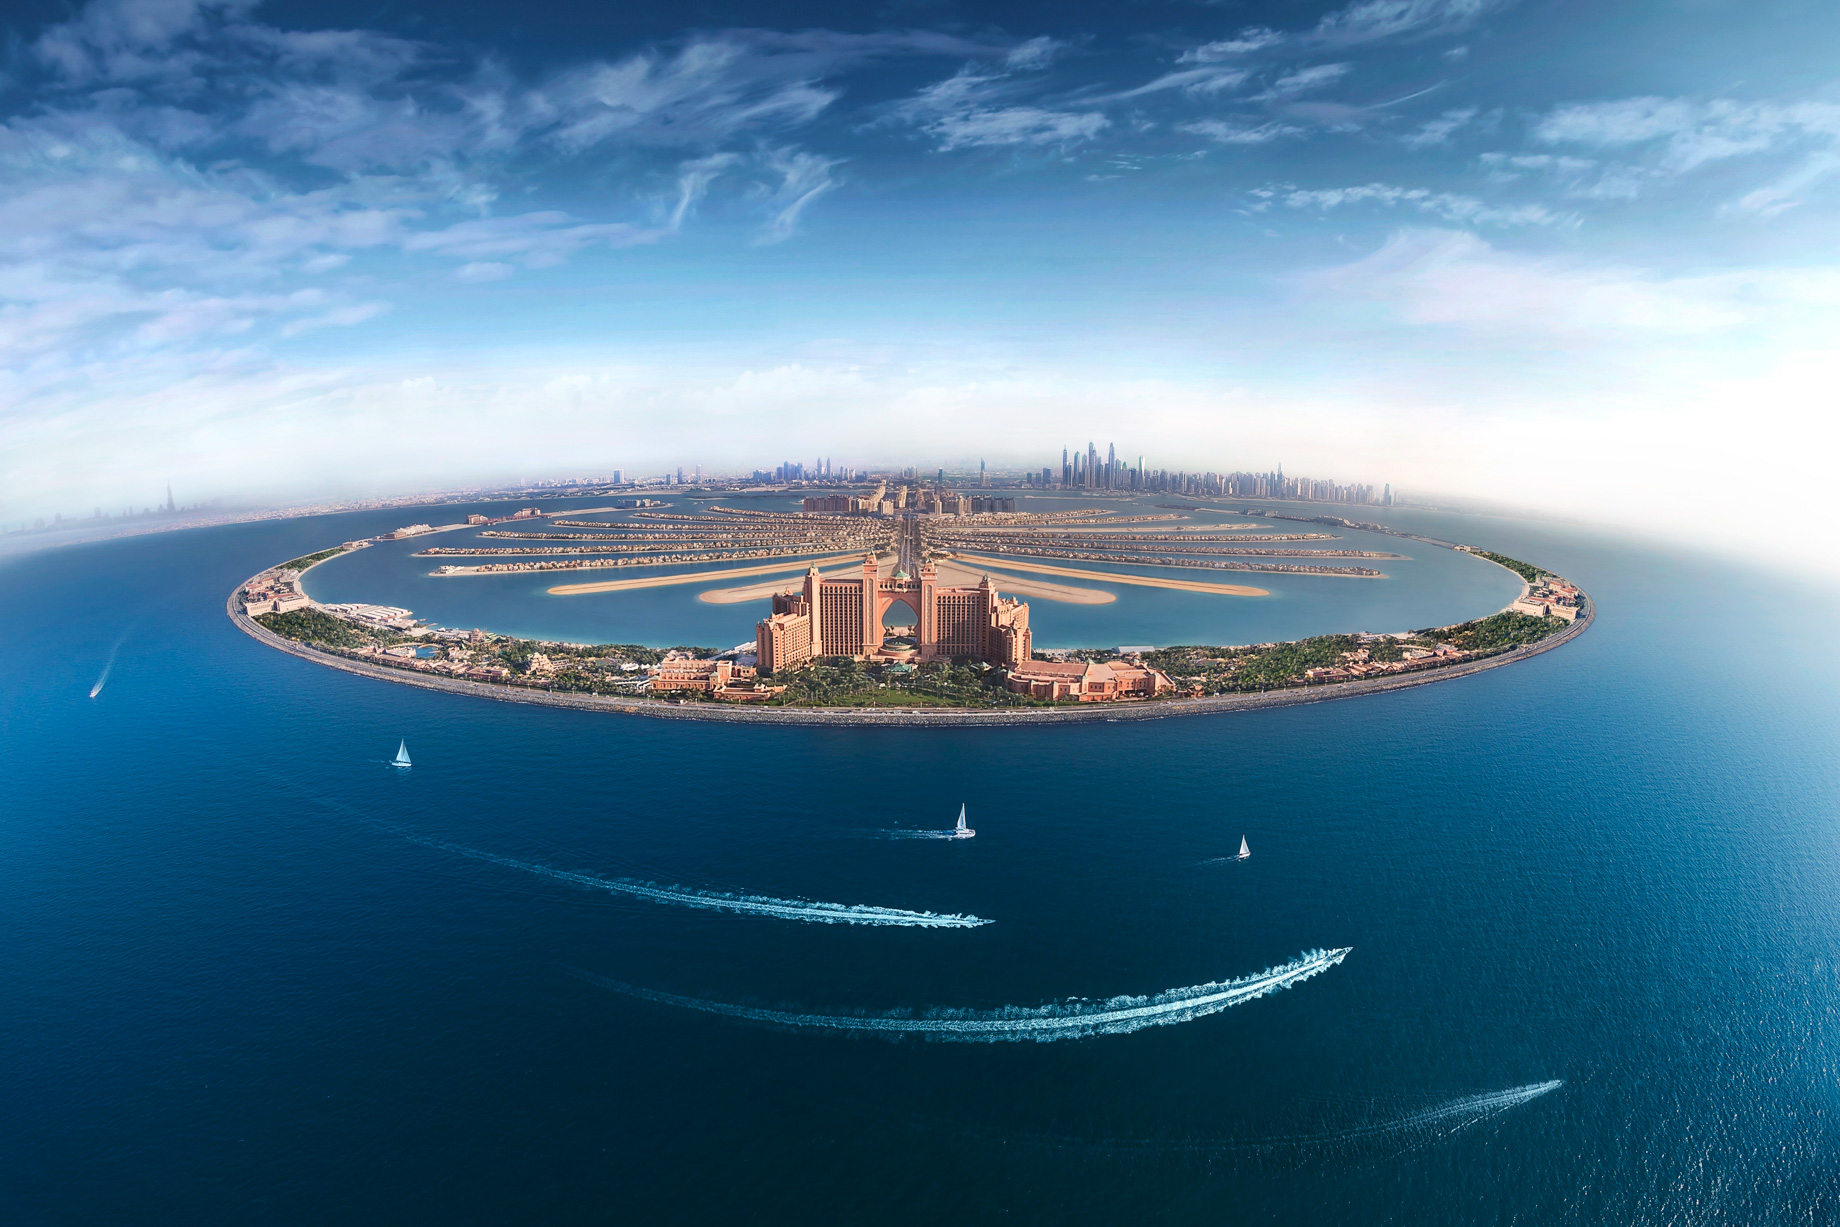 Atlantis The Palm Resort – Crescent Rd, Dubai, UAE – Aerial View